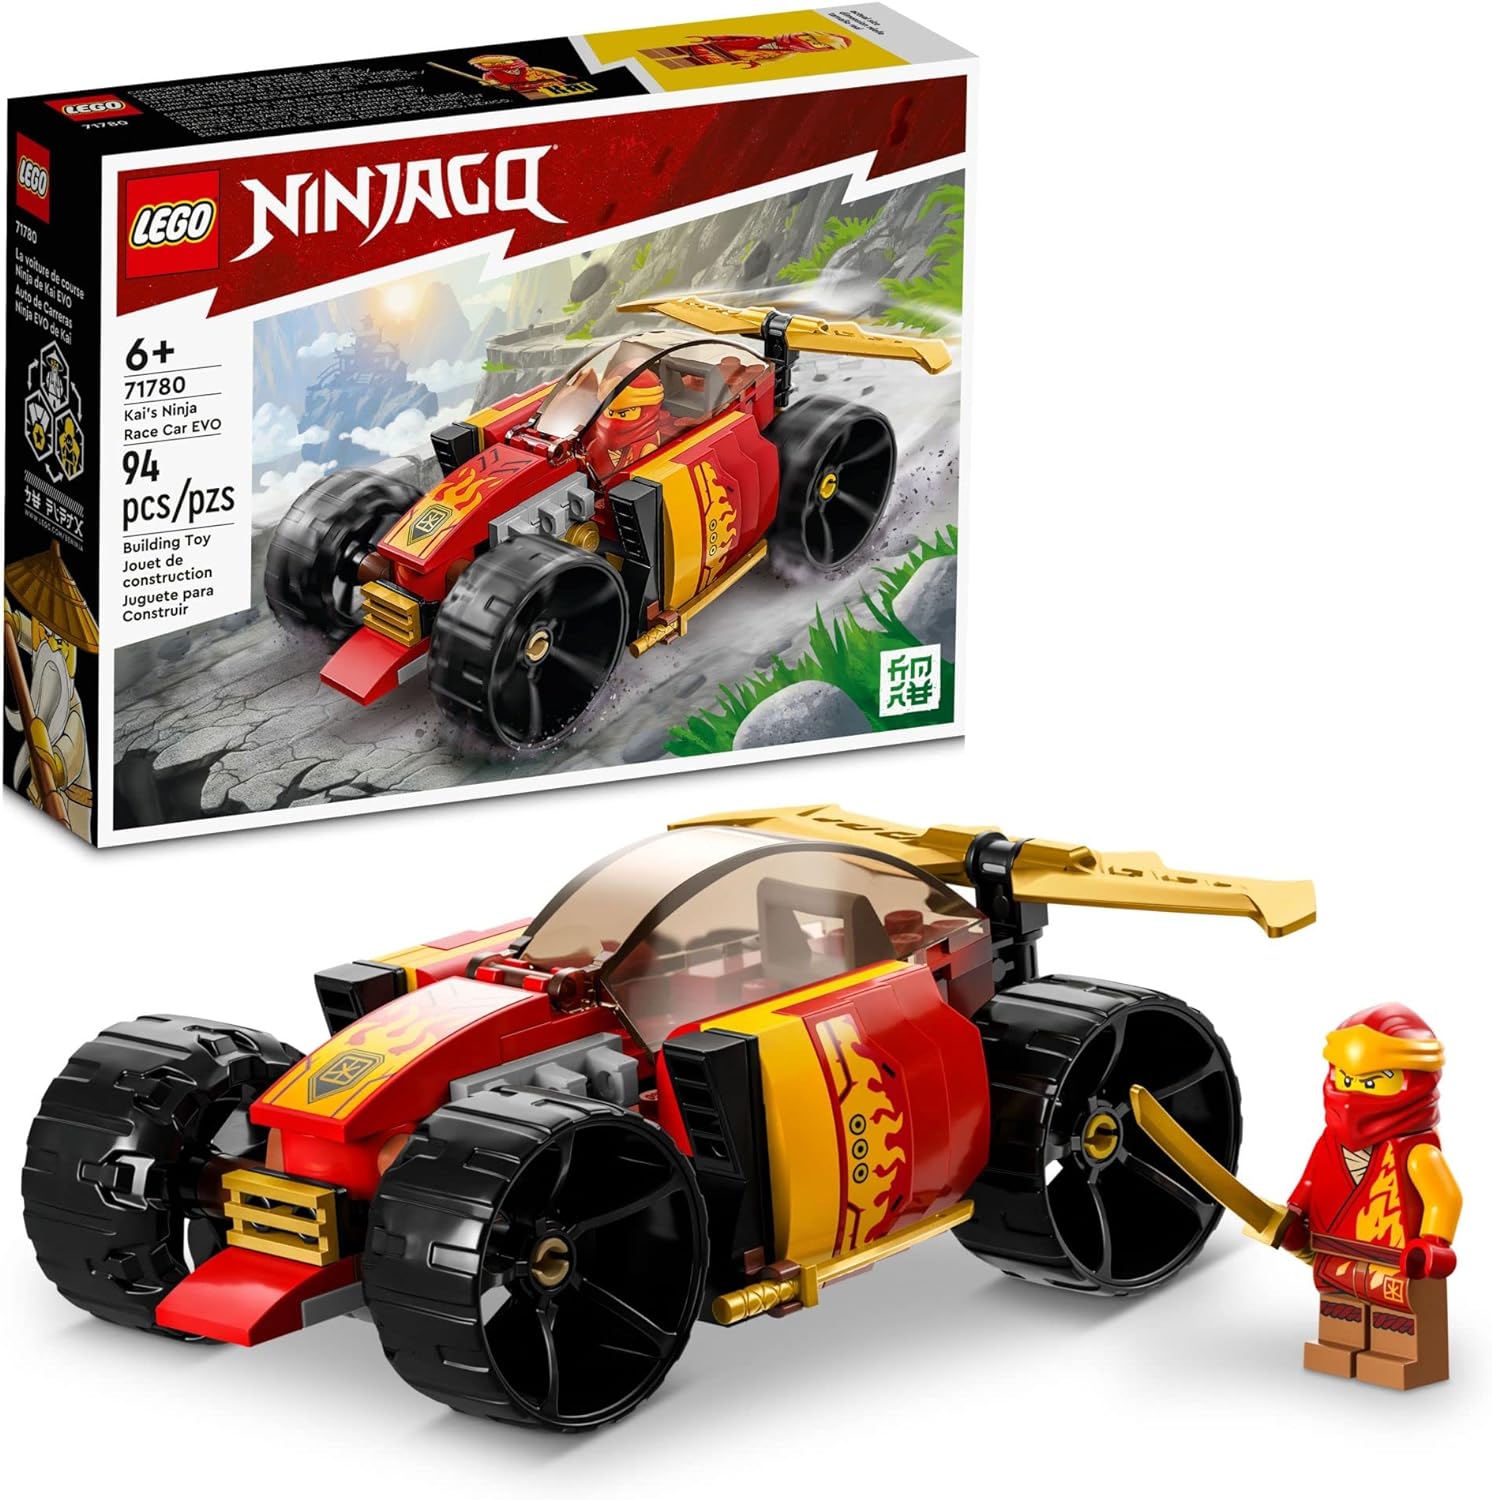 Lego NINJAGO Kai's Ninja Race Car EVO 71…